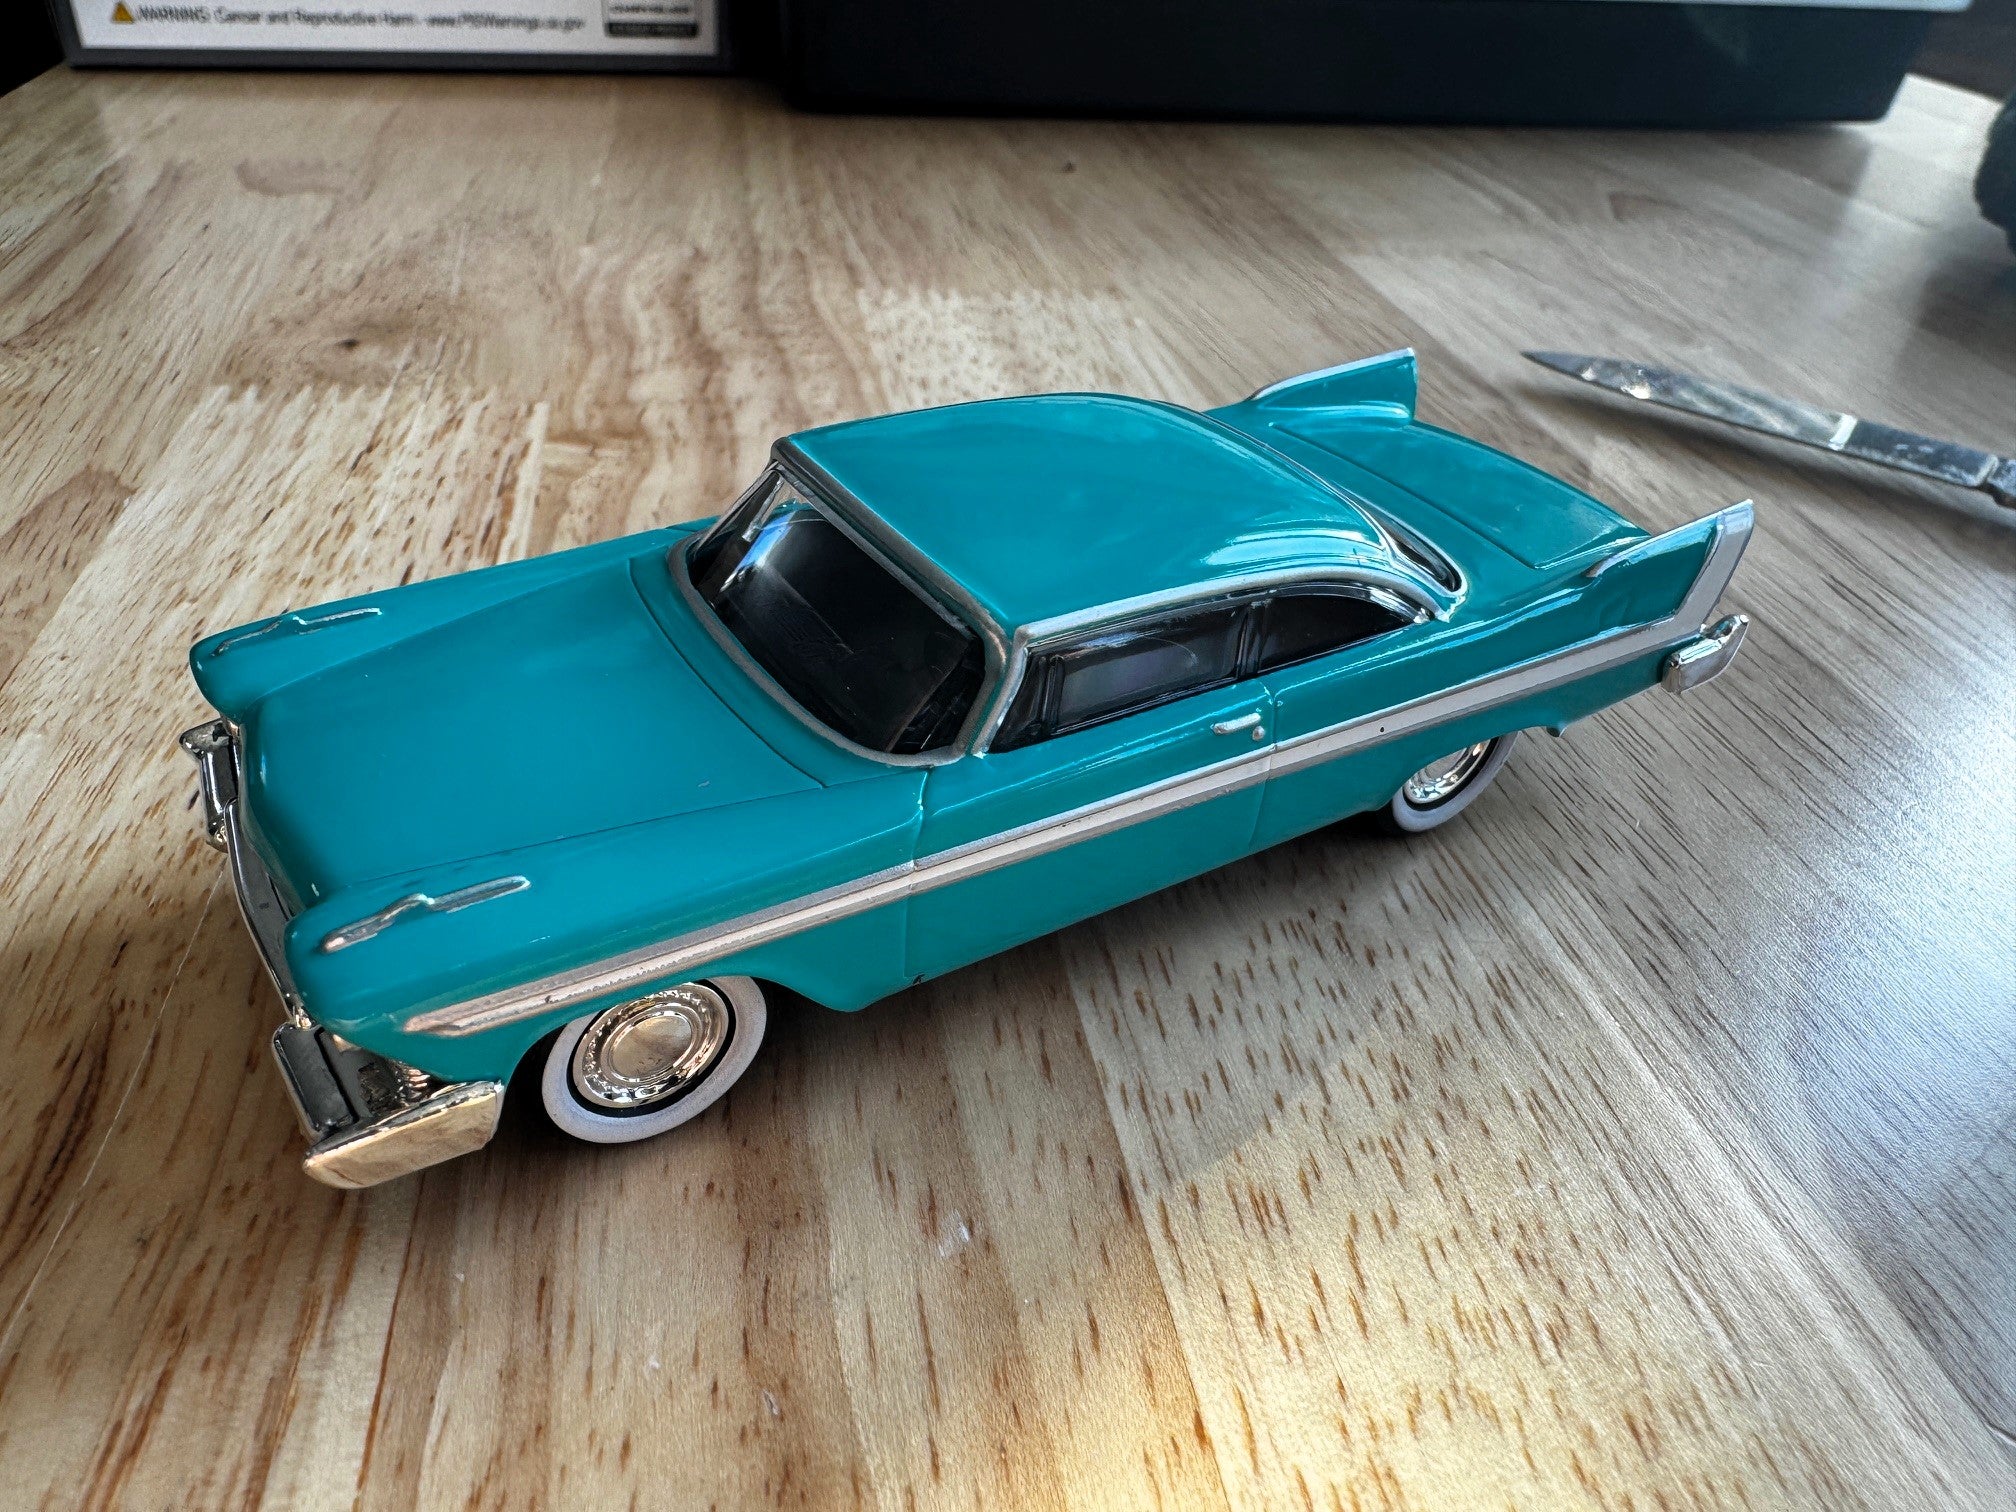 1958 Plymouth Fury (Teal) 1/48 Diecast Car